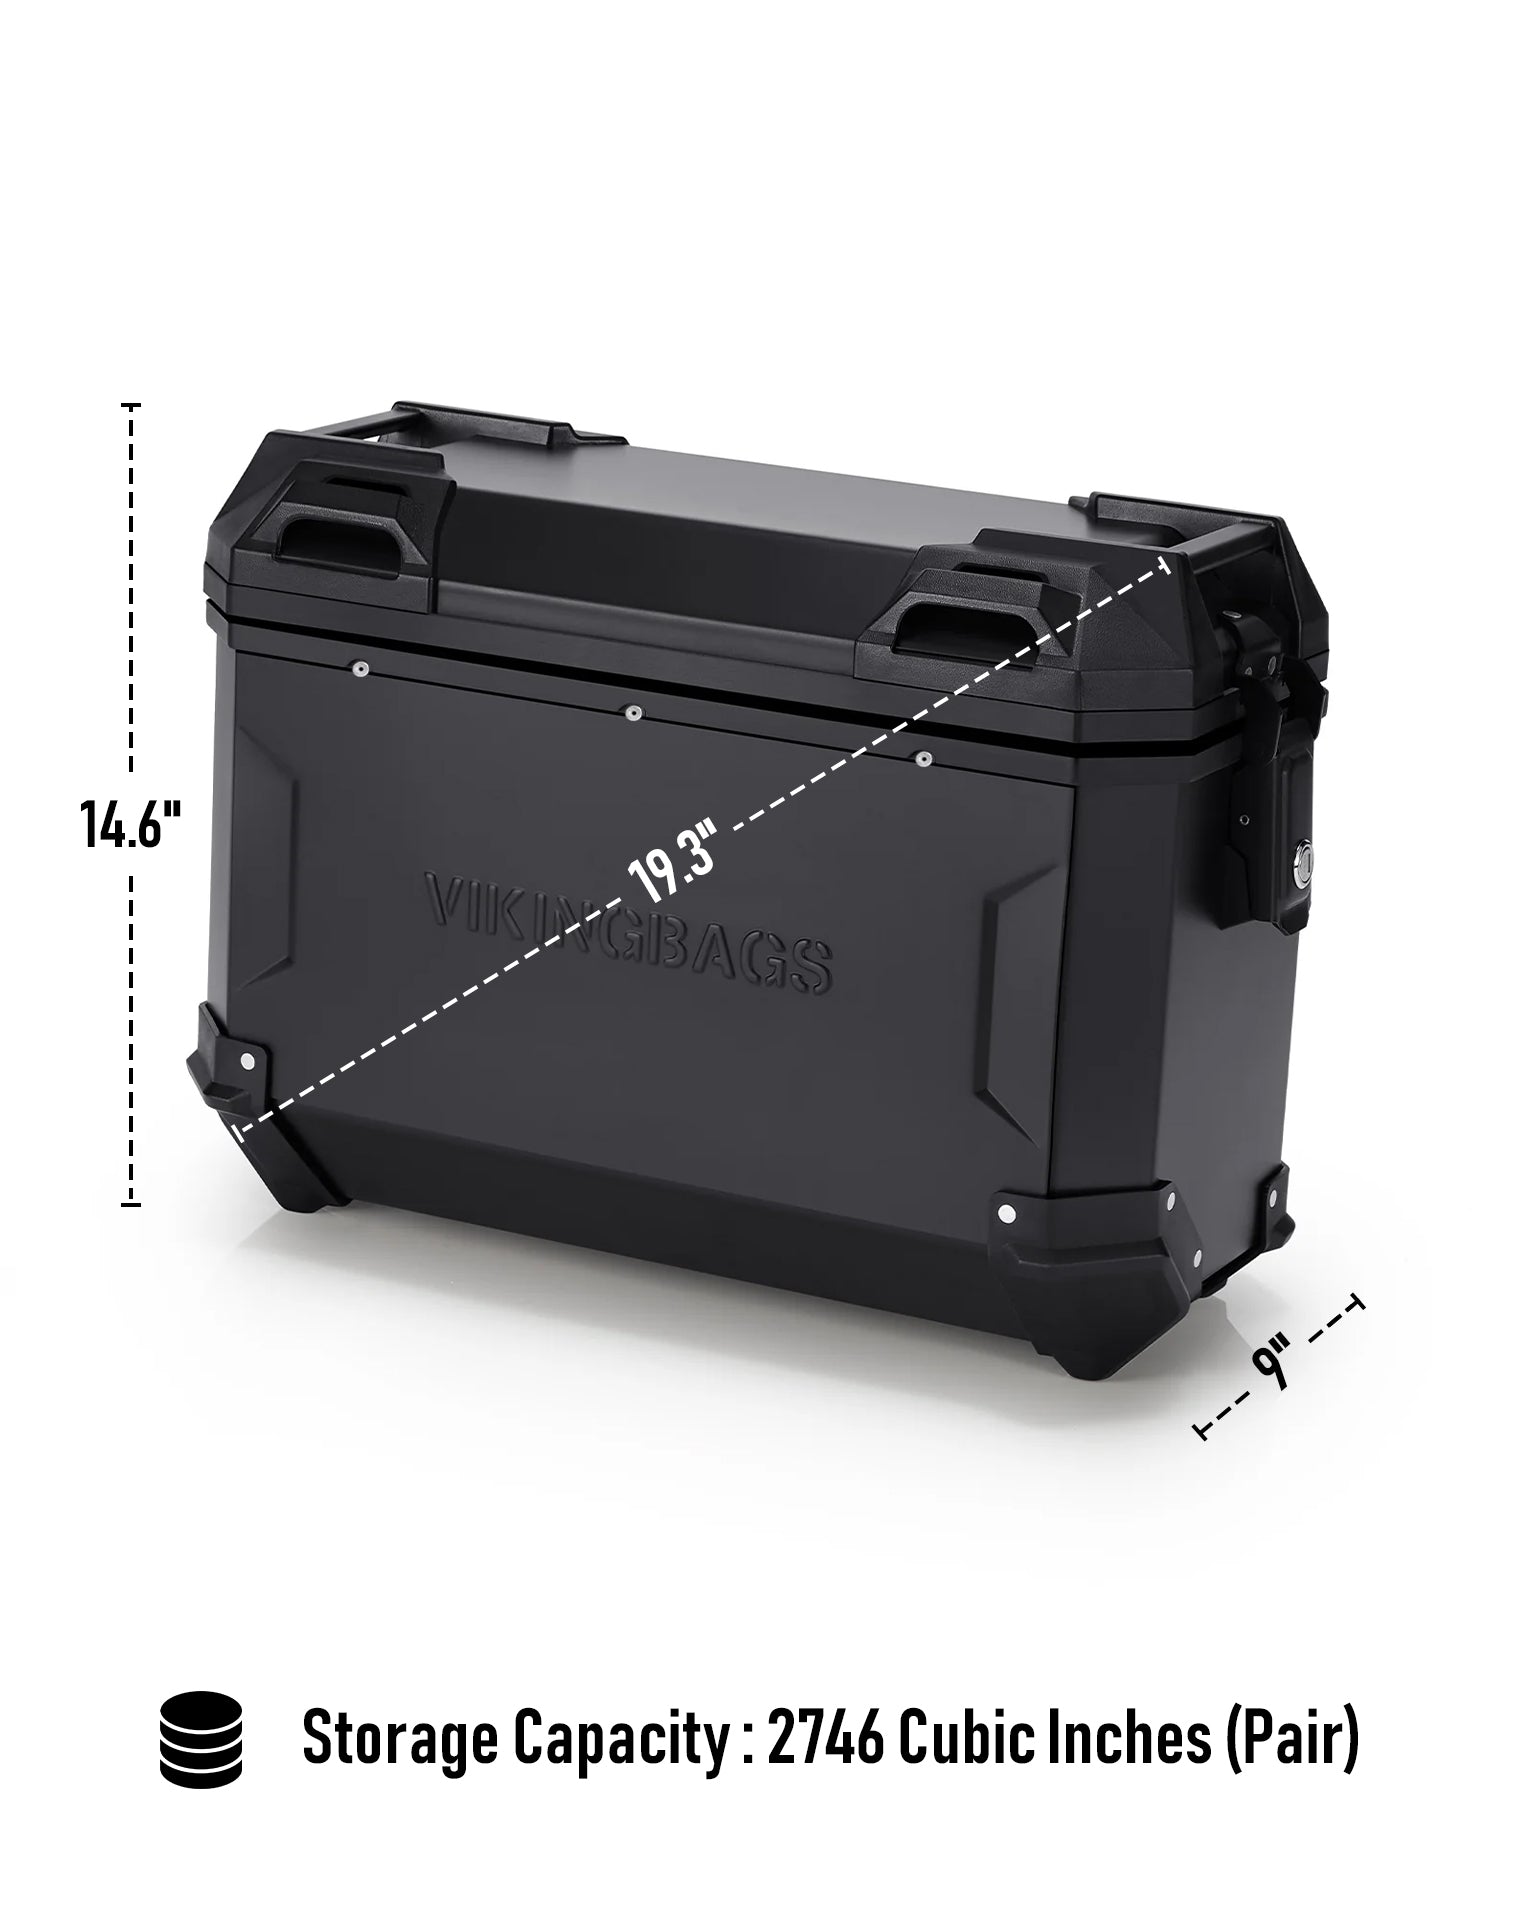 Viking Apex XL Kawasaki VERSYS 1000 Aluminum Side Cases Black Cubic Inches